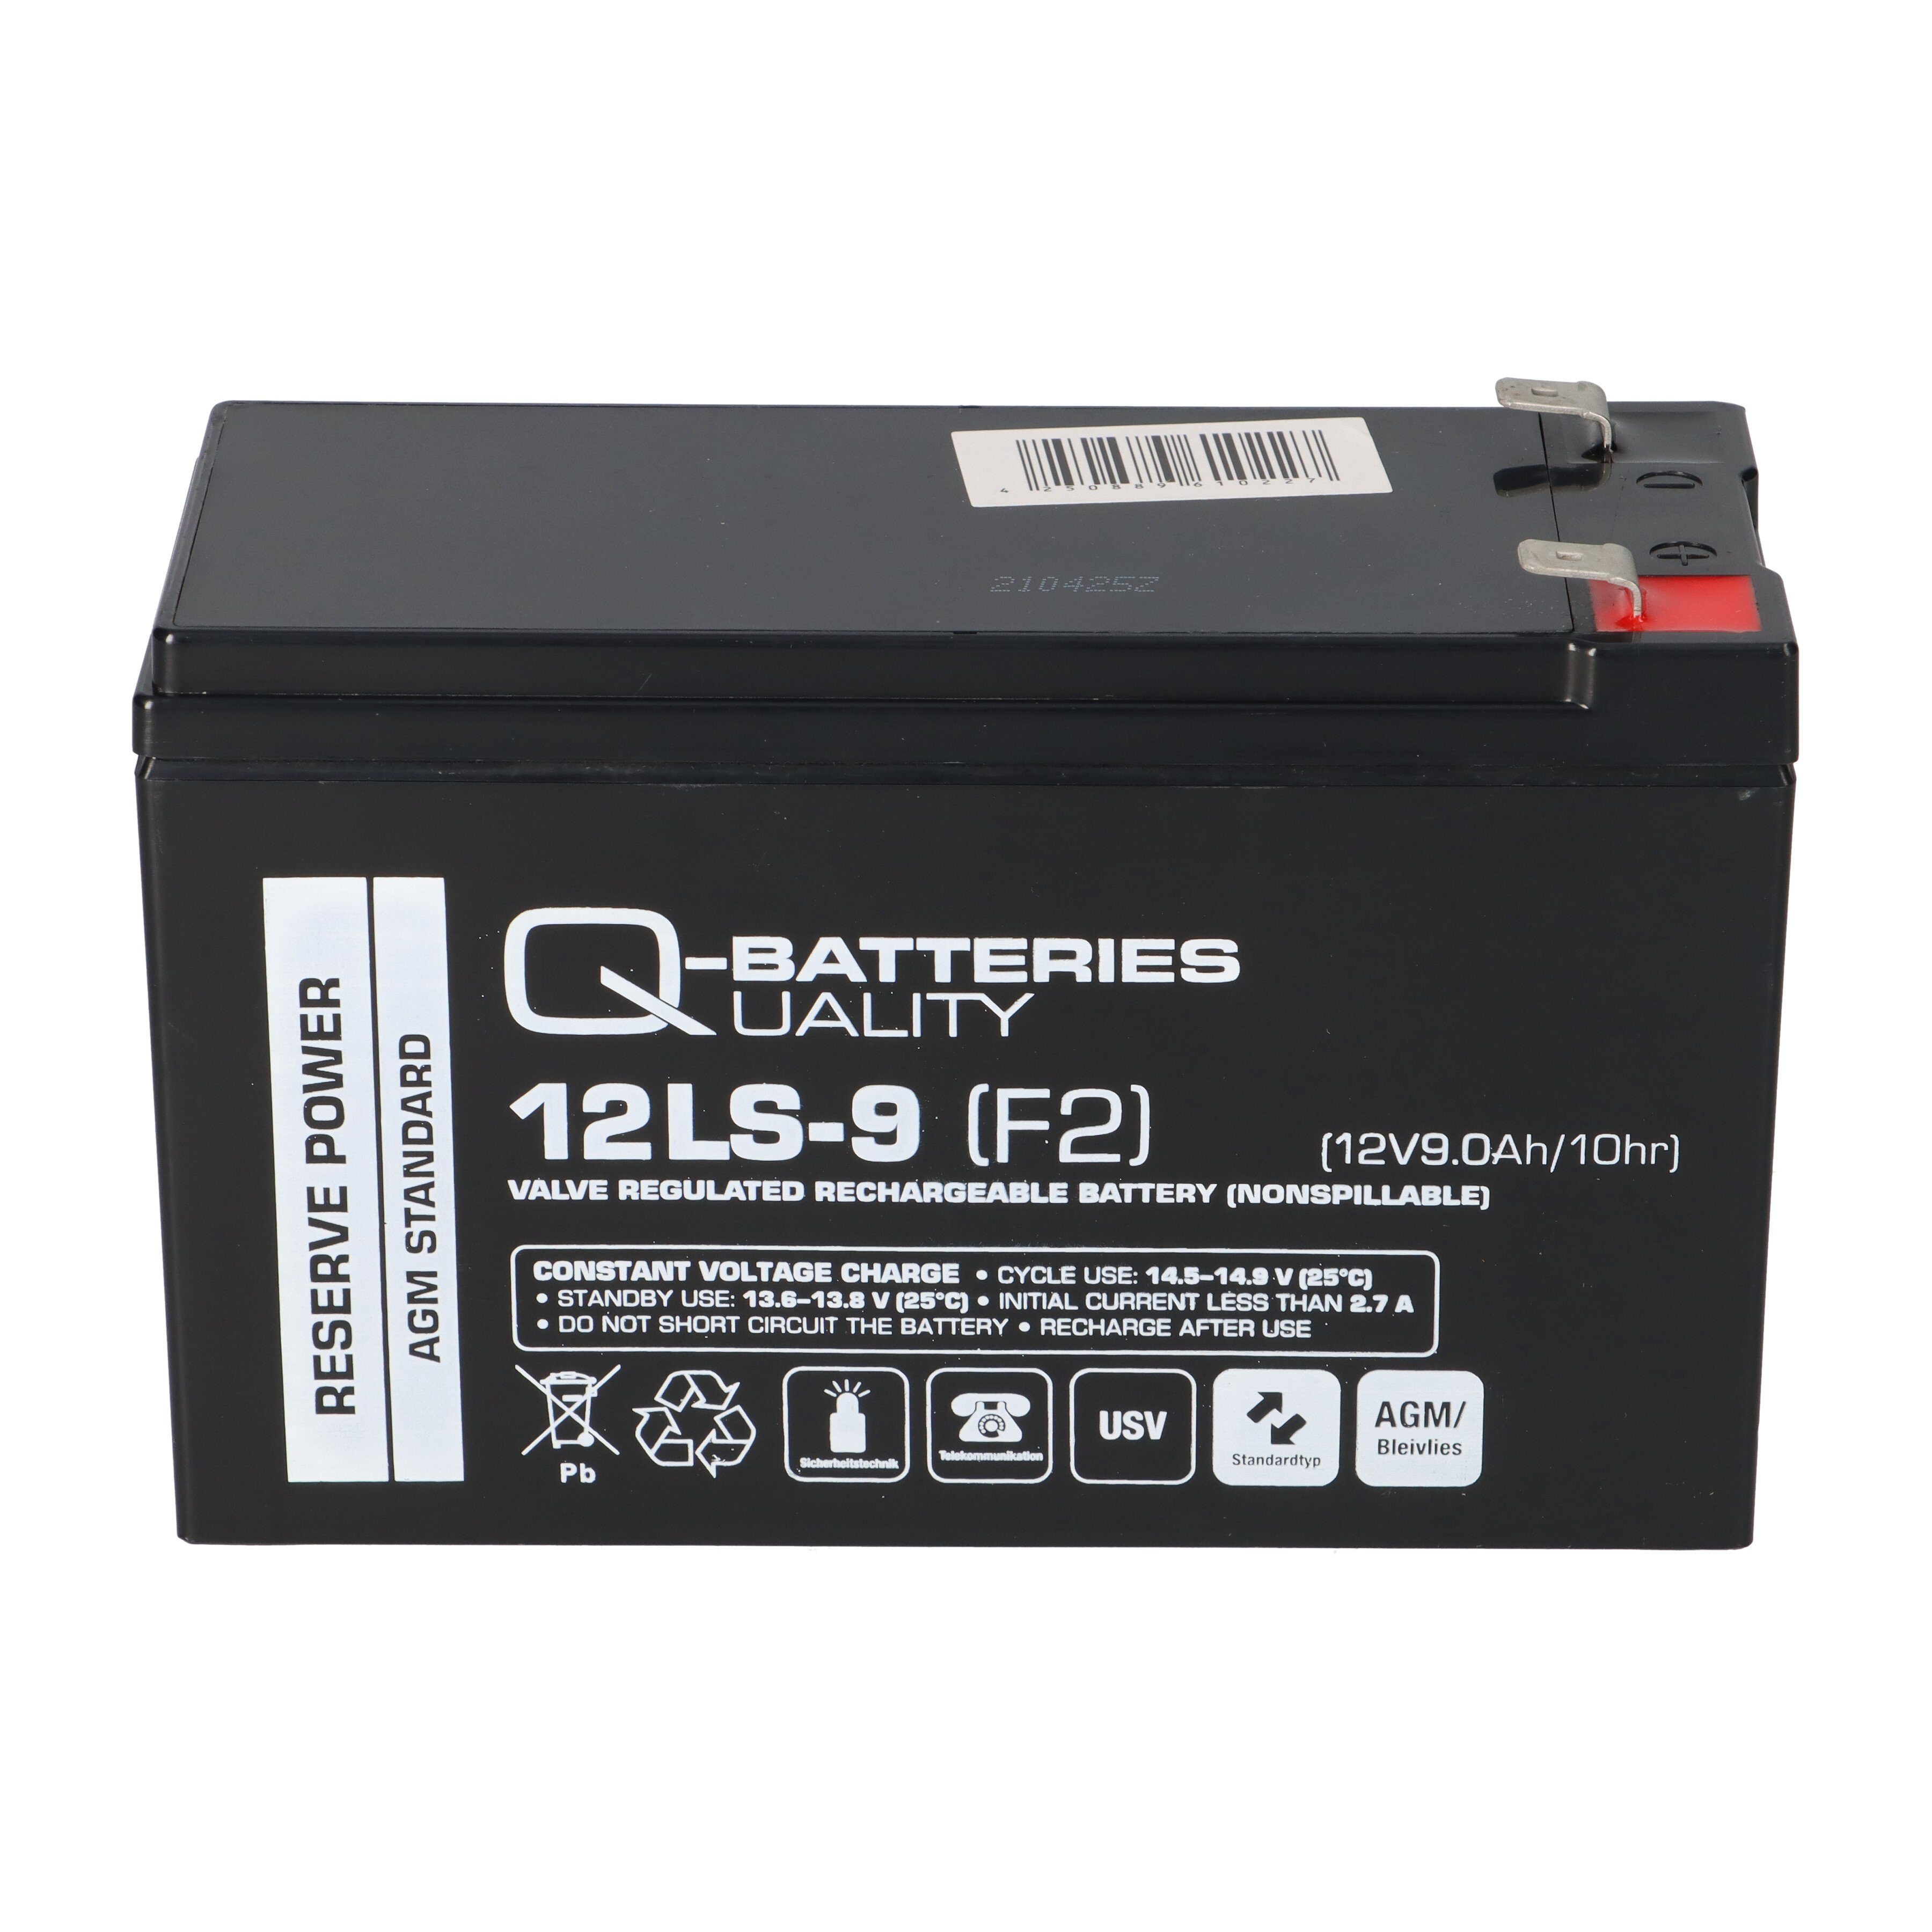 Q-Batteries Q-Batteries Akku Jahre F2 Bleiakkus 10 12V AGM 9Ah 12LS-9